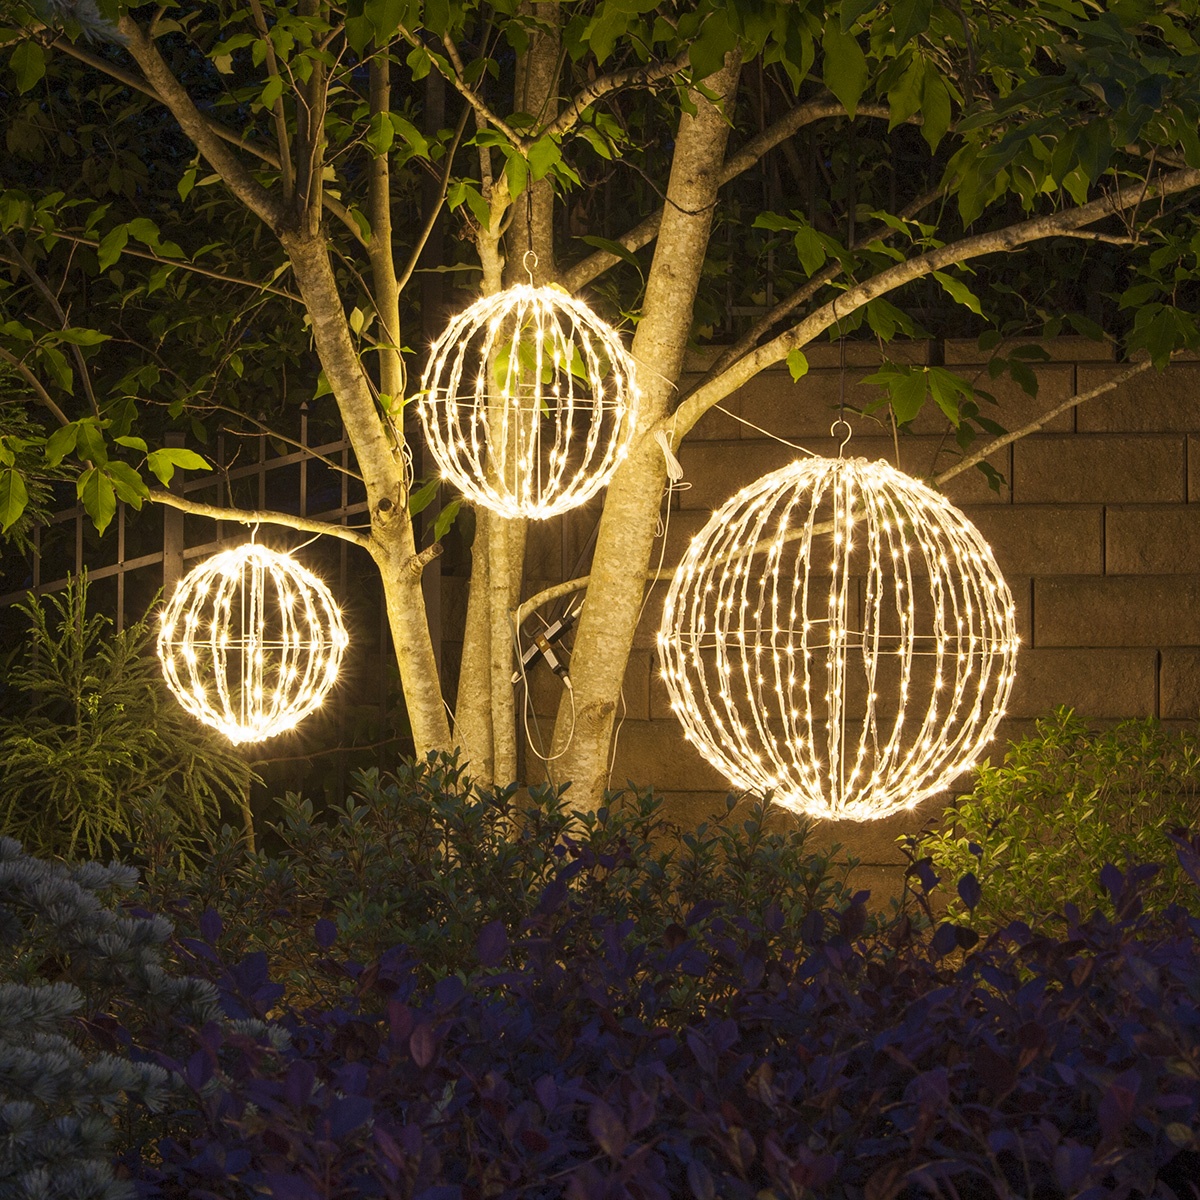 Hanging Decorative LED Solar Powered Flower Ball Lights Outdoor Landscape 